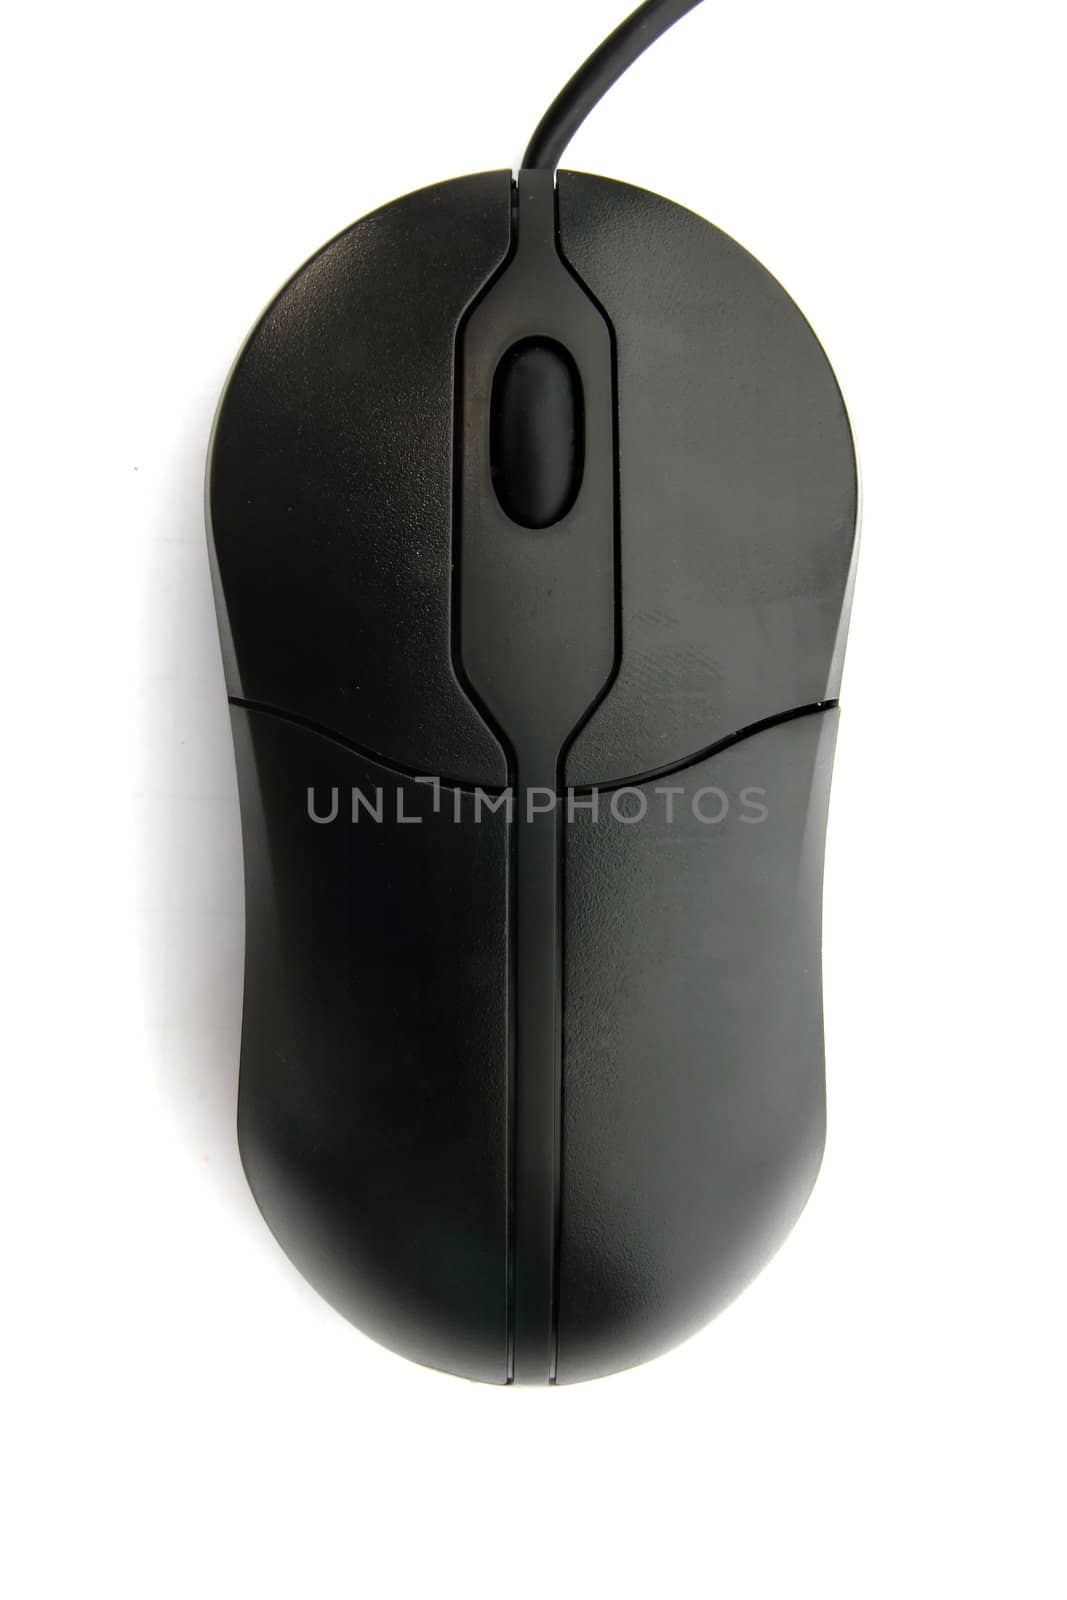 Closeup of Black Mouse islolated on White background